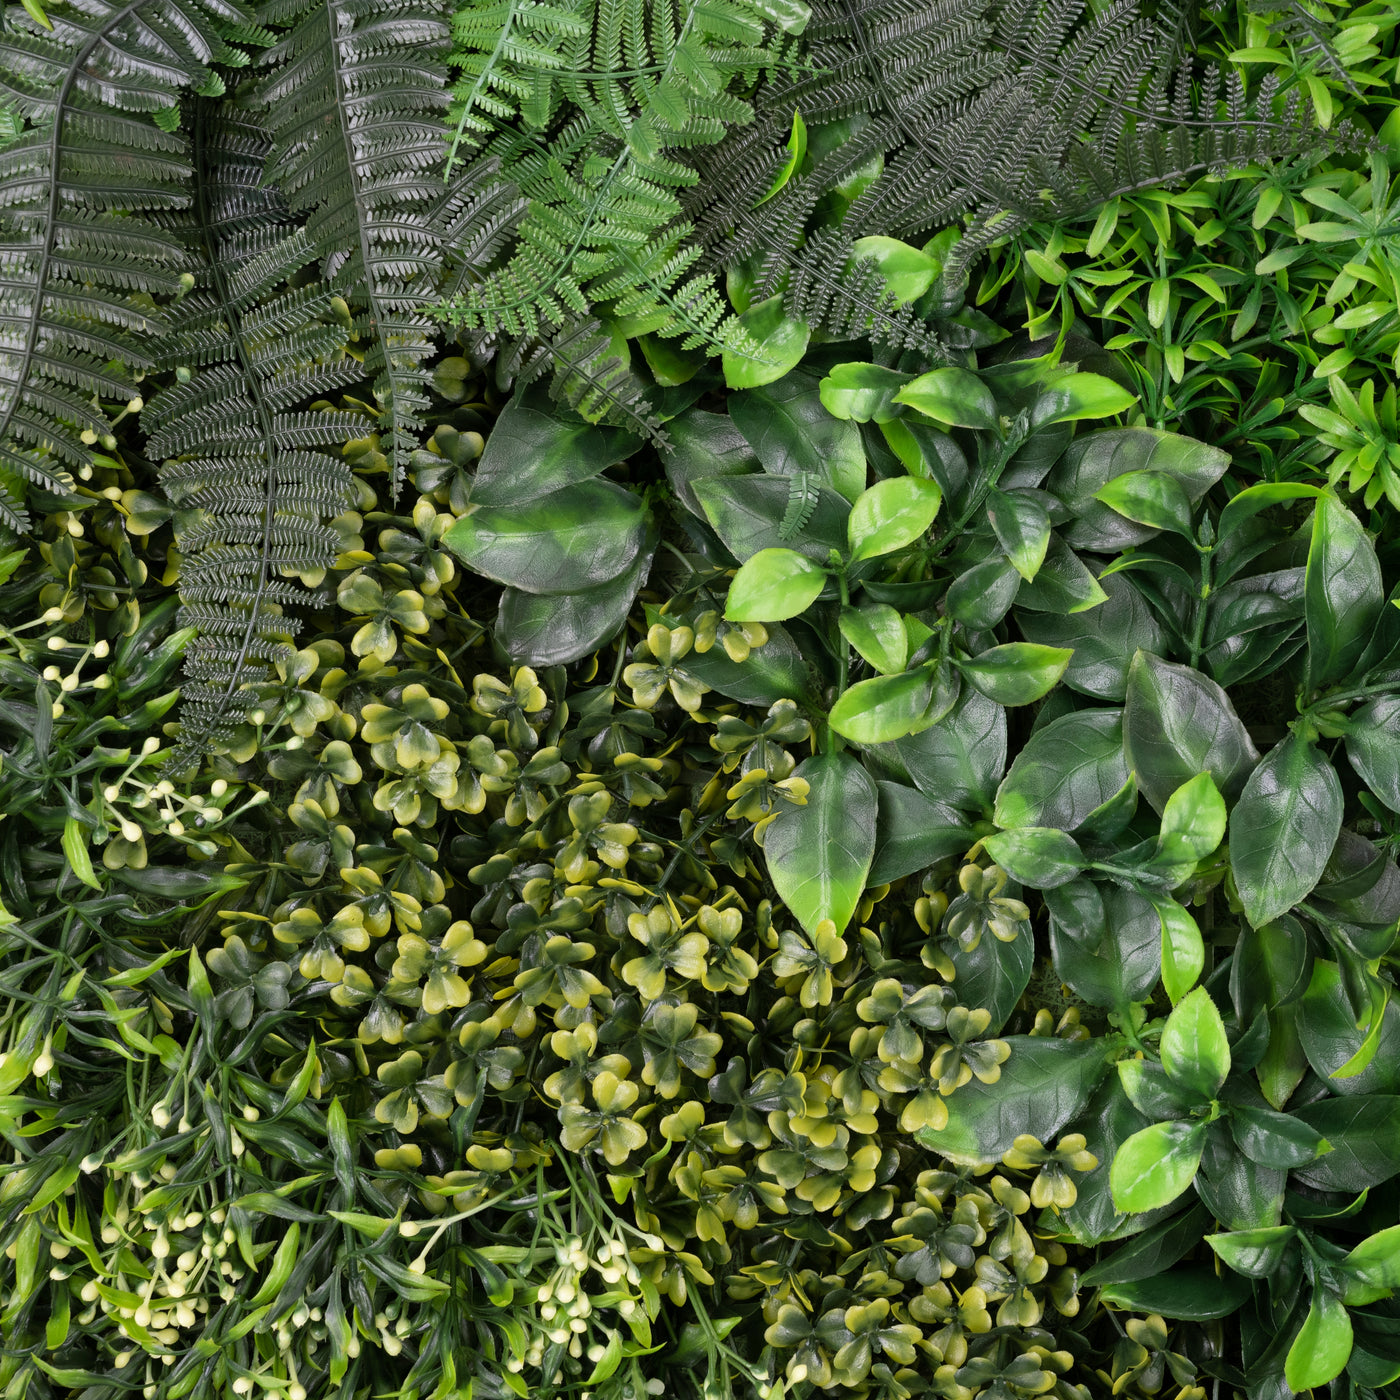 Gradina verticala din plante artificiale 1mp model design V47 pentru interior sau exterior